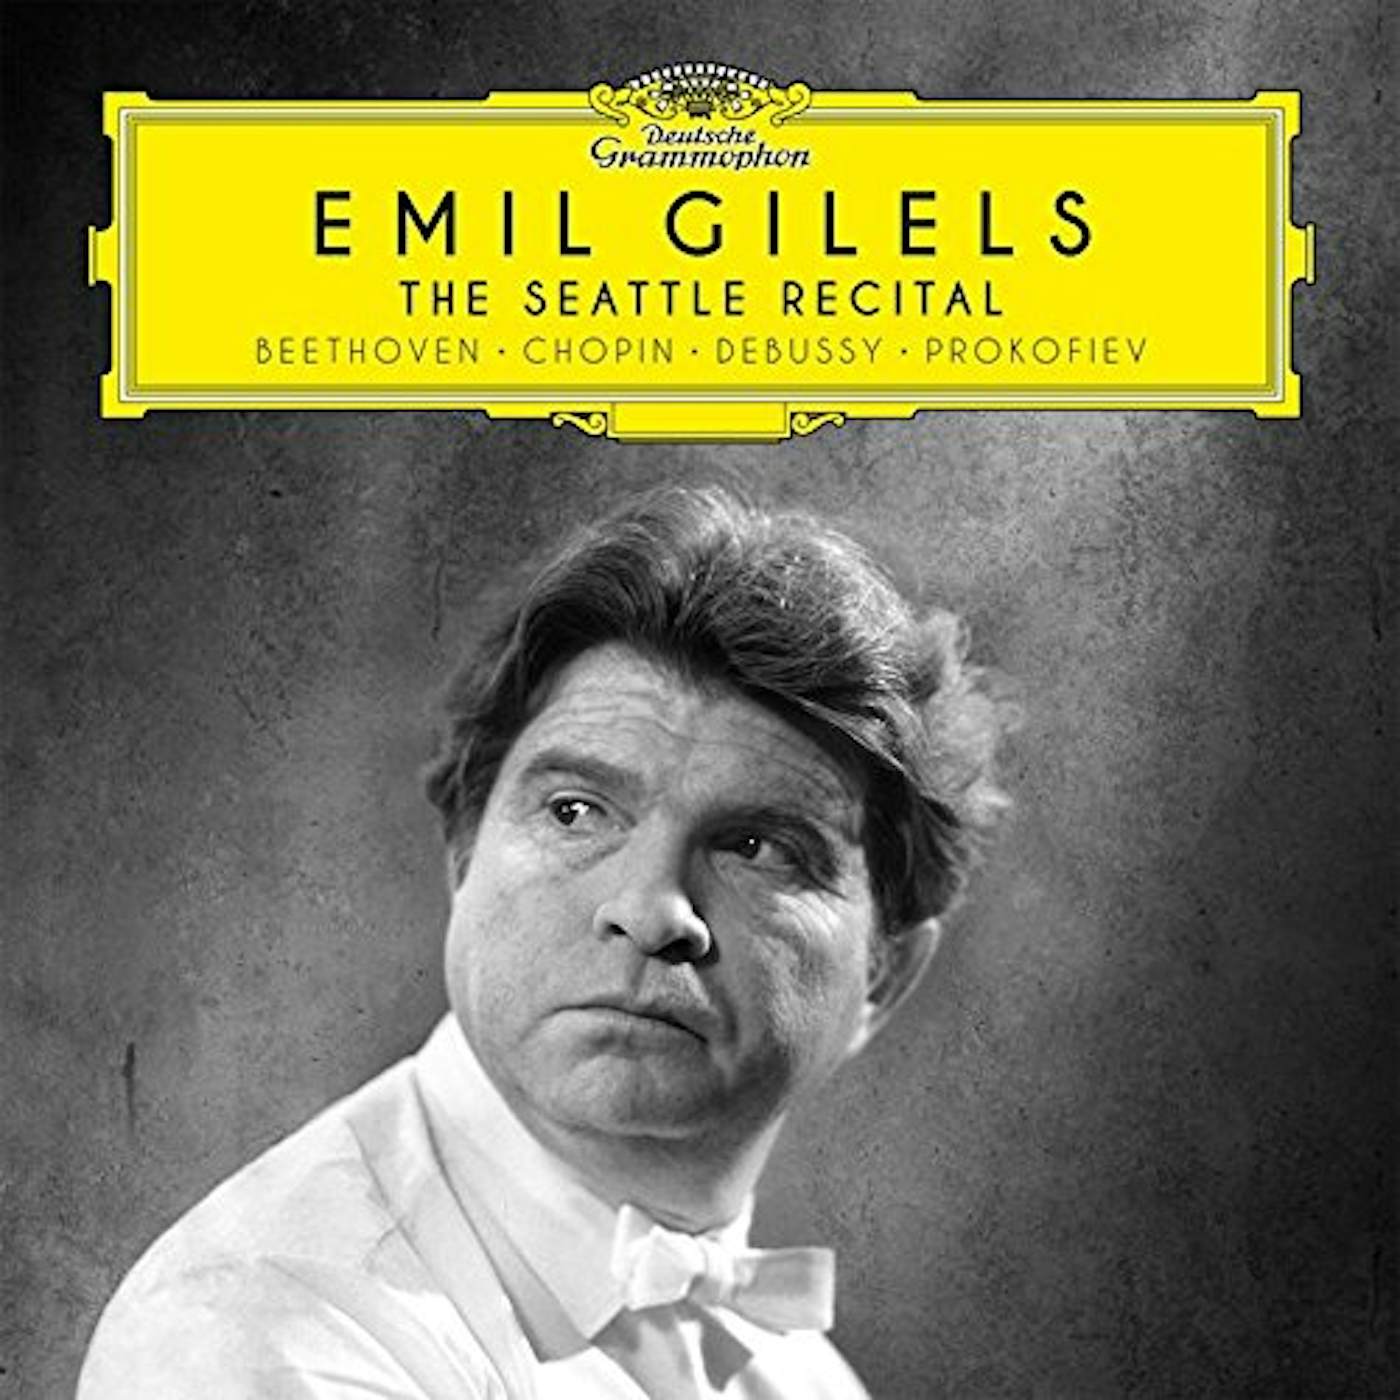 Emil Gilels 1964 SEATTLE RECITAL CD